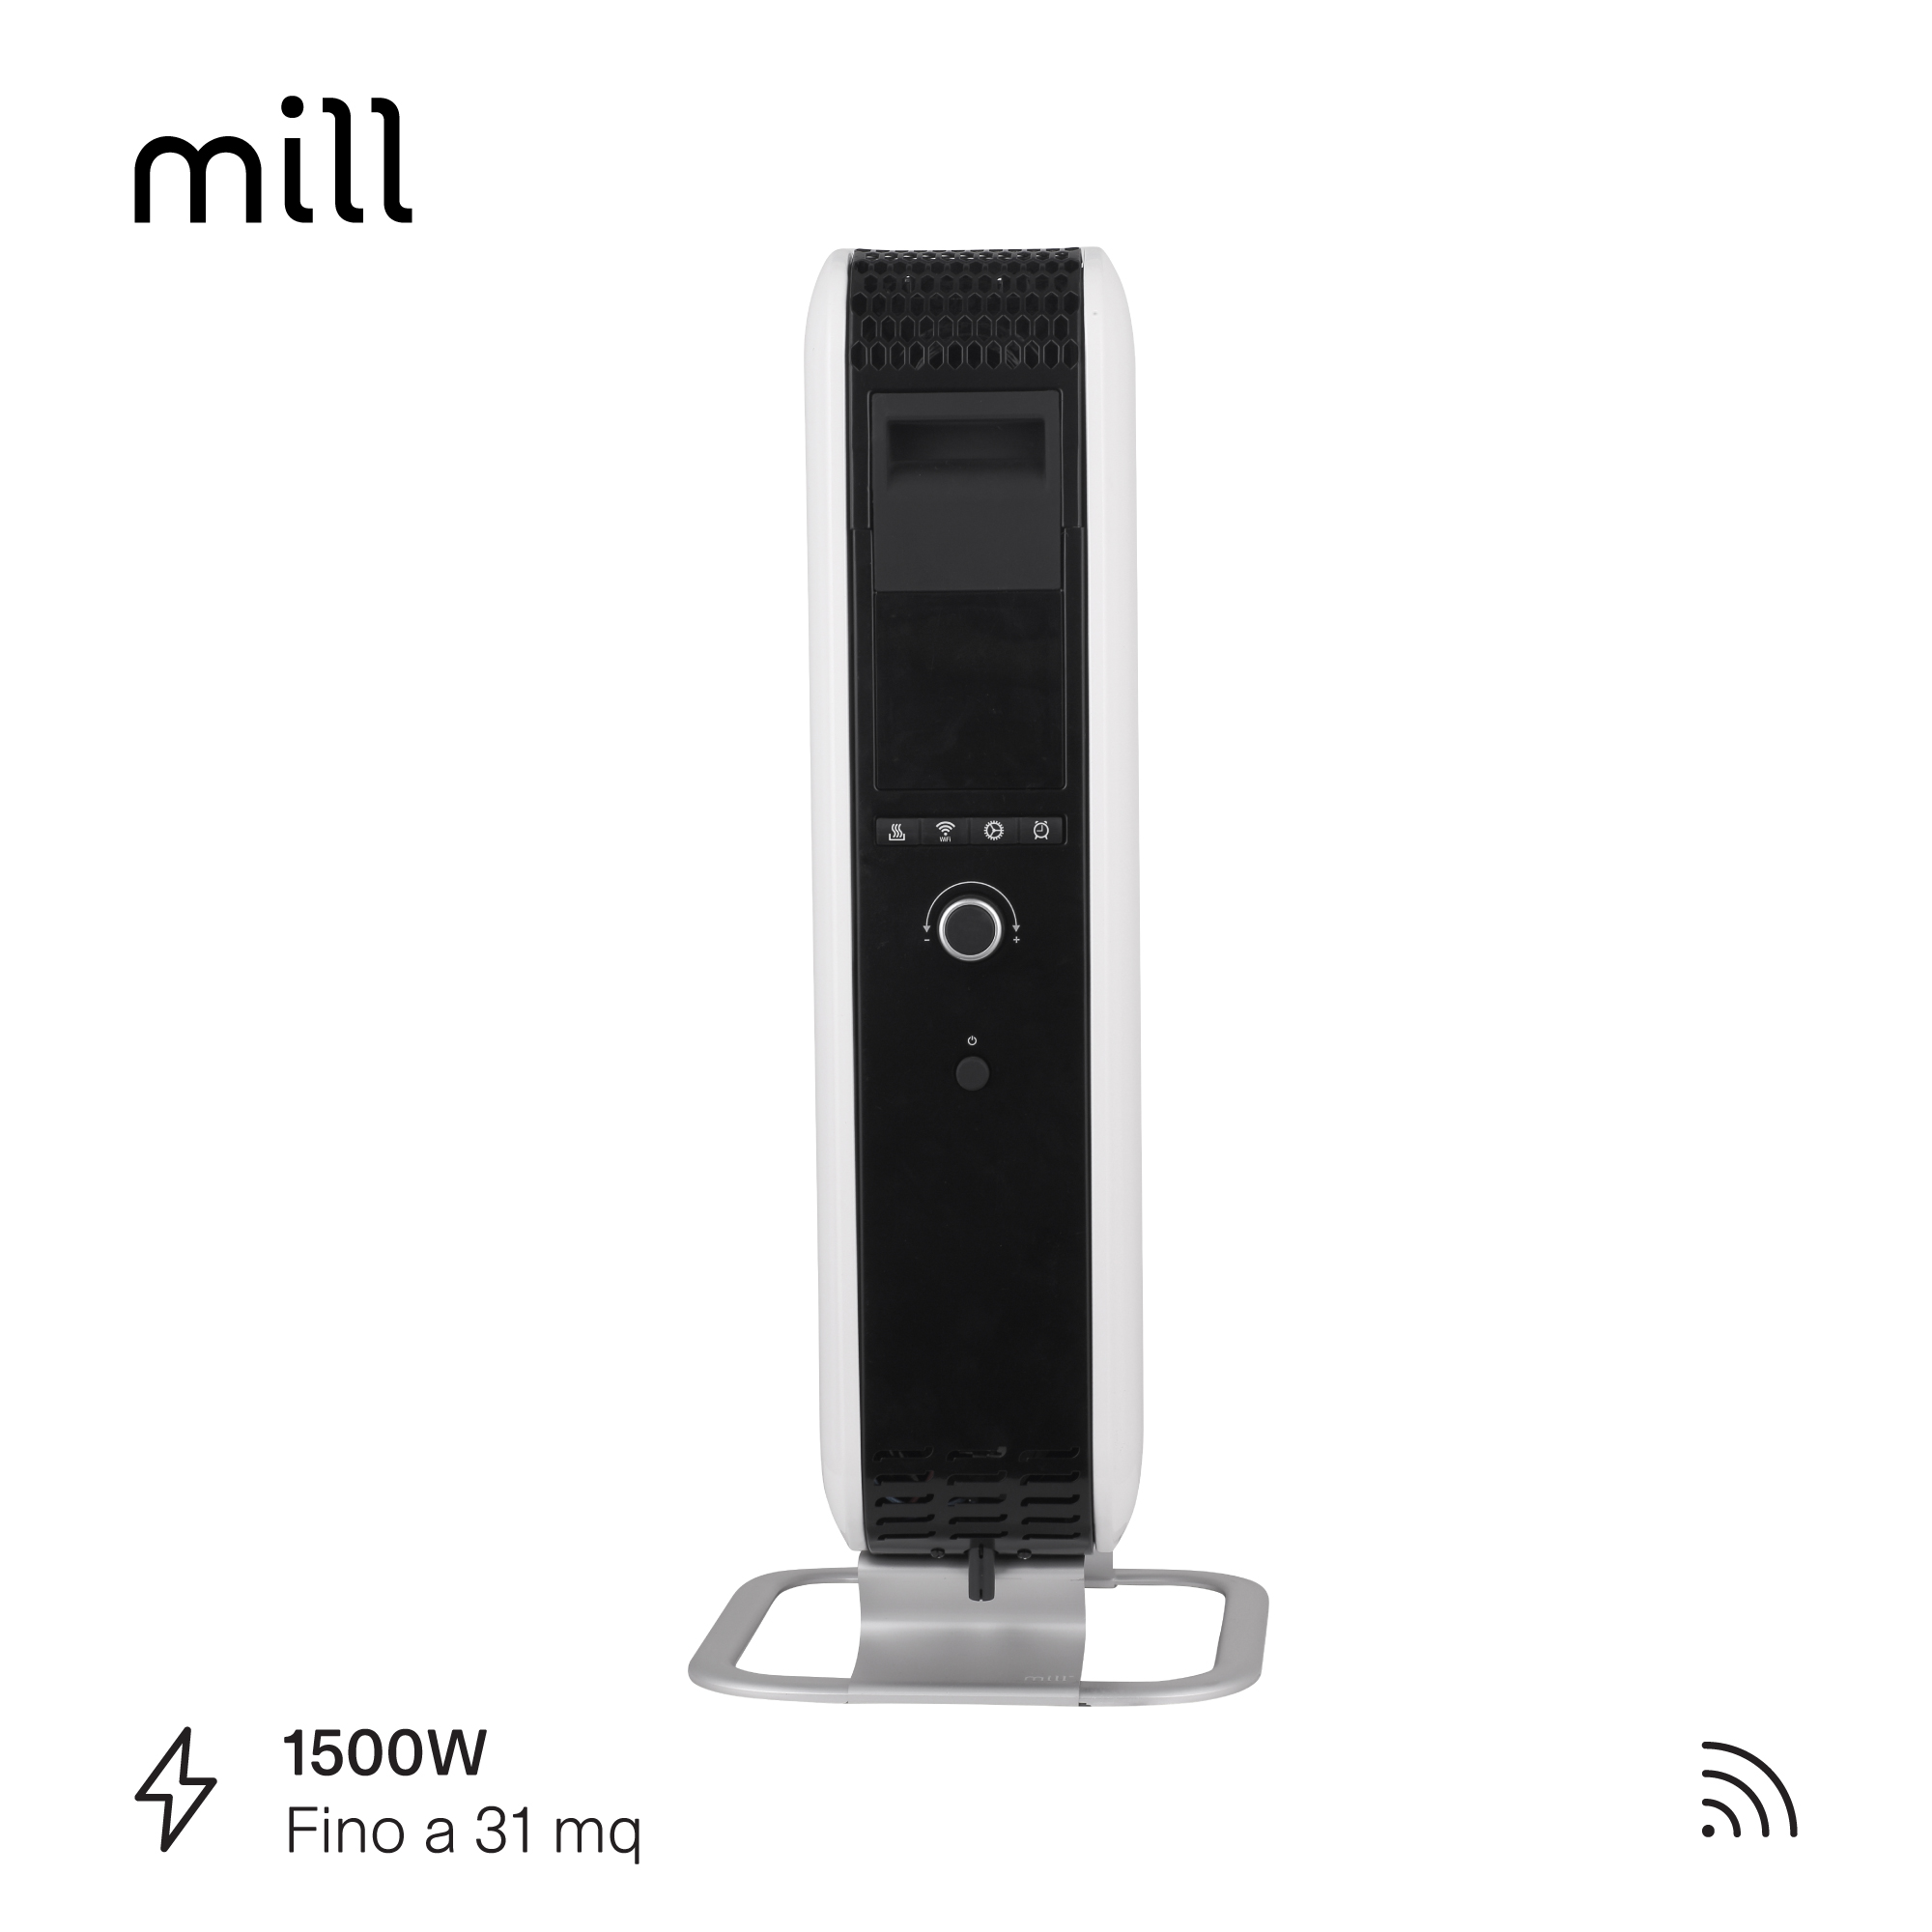 Radiatore ad Olio Mill Gentle Air 1500W WiFi - Mill Heat